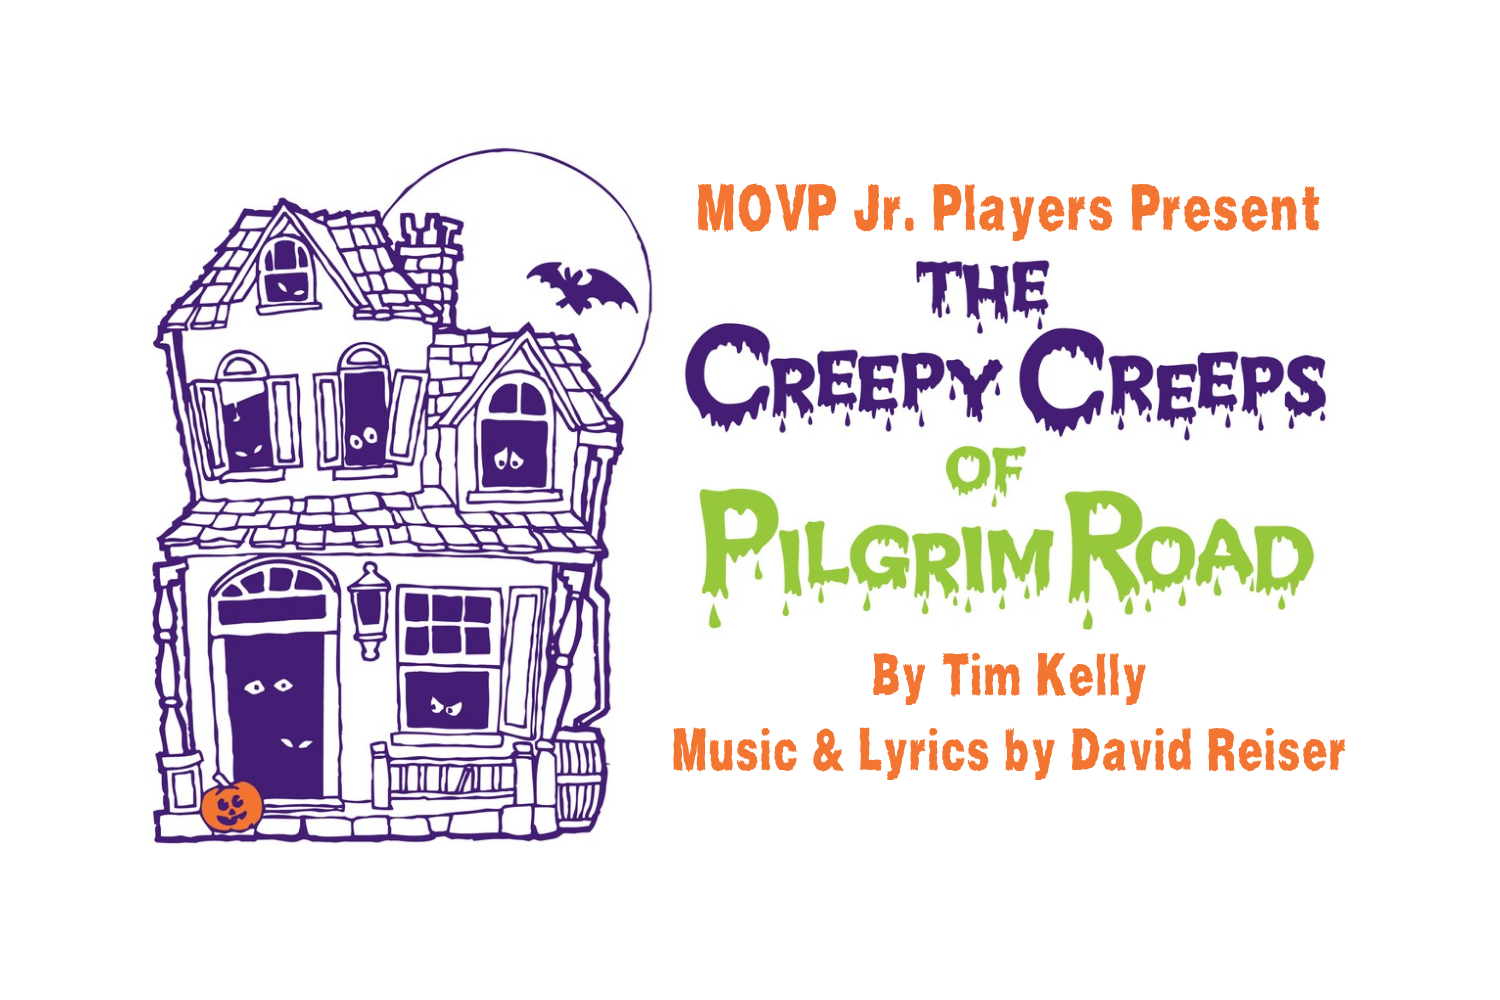 The Creepy Creeps of Pilgrim Road